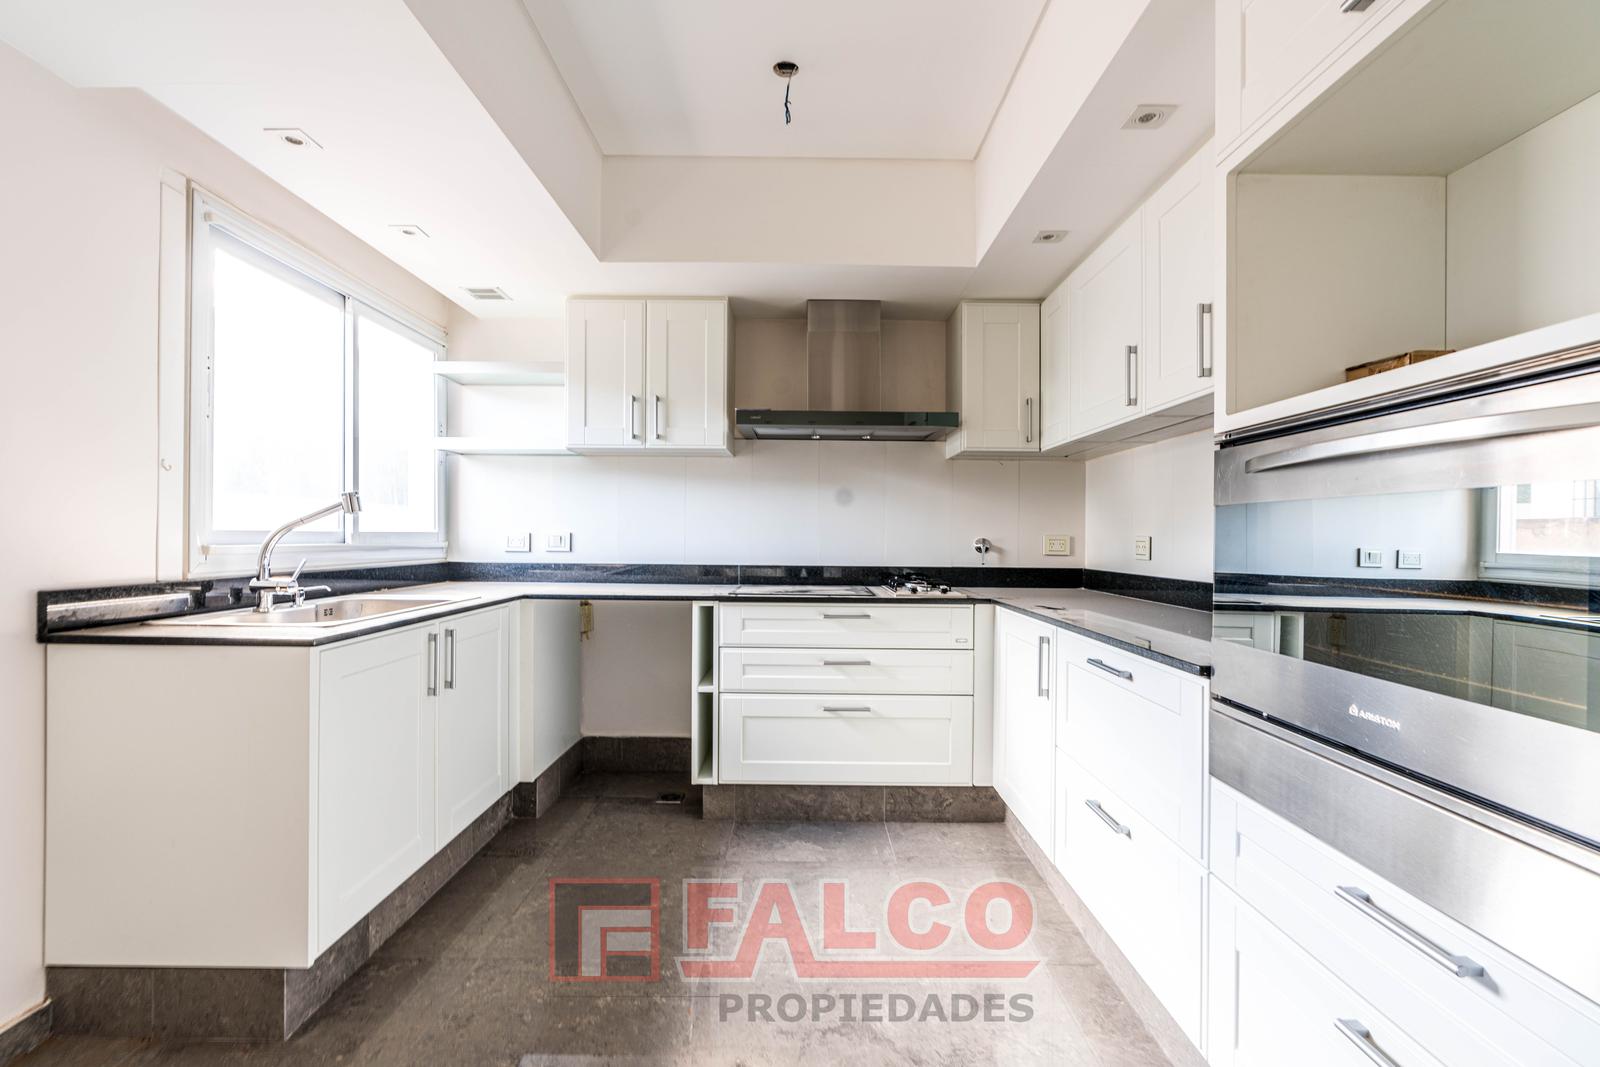 #4956550 | Sale | Apartment | Villa Ortuzar (Falco Propiedades)